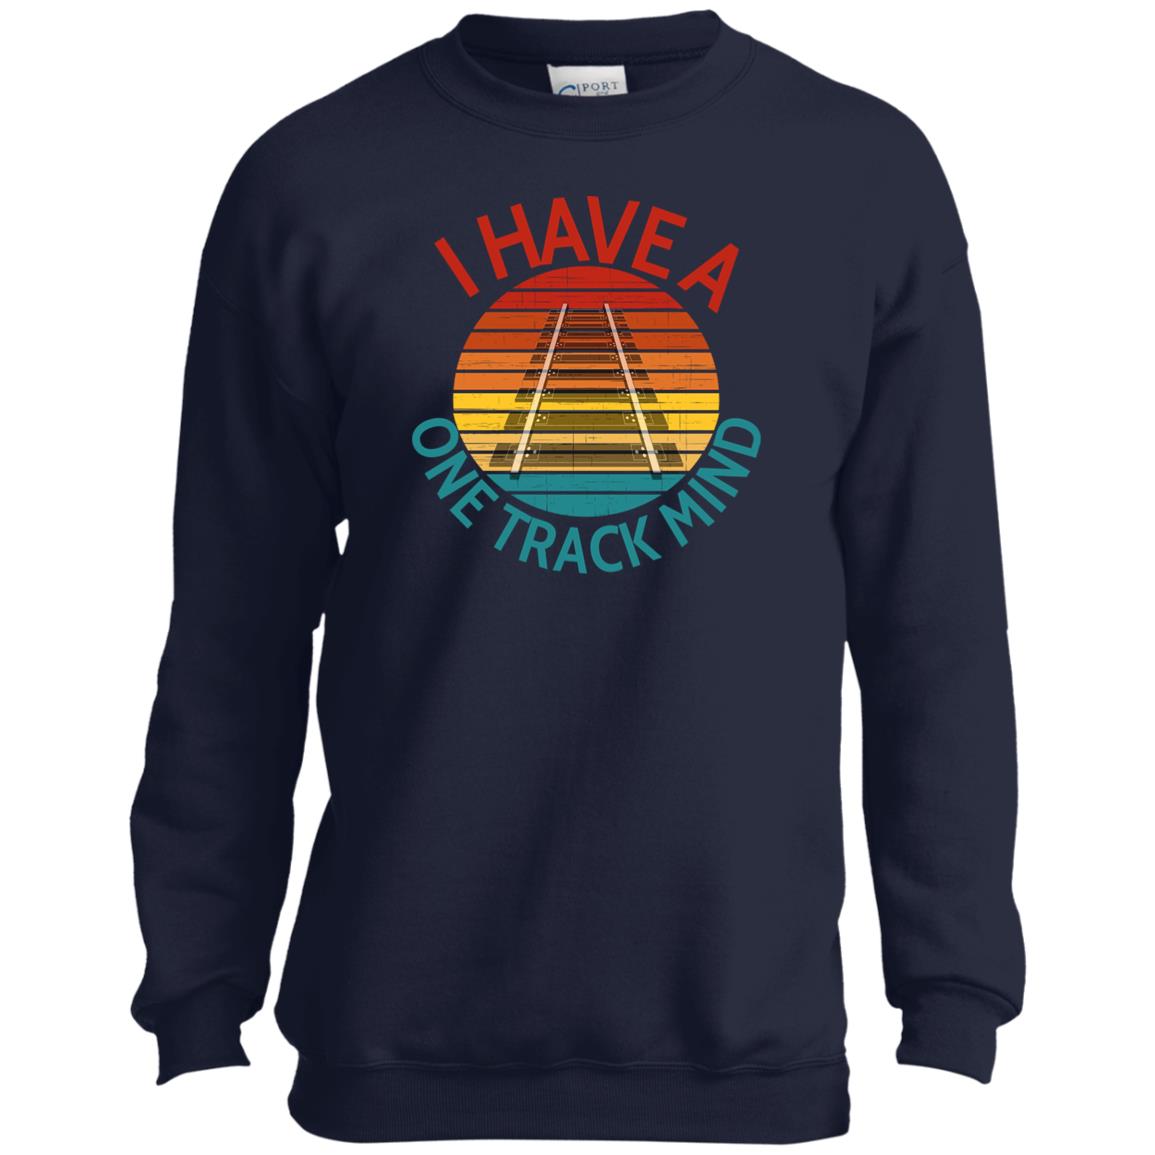 One Track Mind Youth Crewneck Sweatshirt - Broken Knuckle Apparel